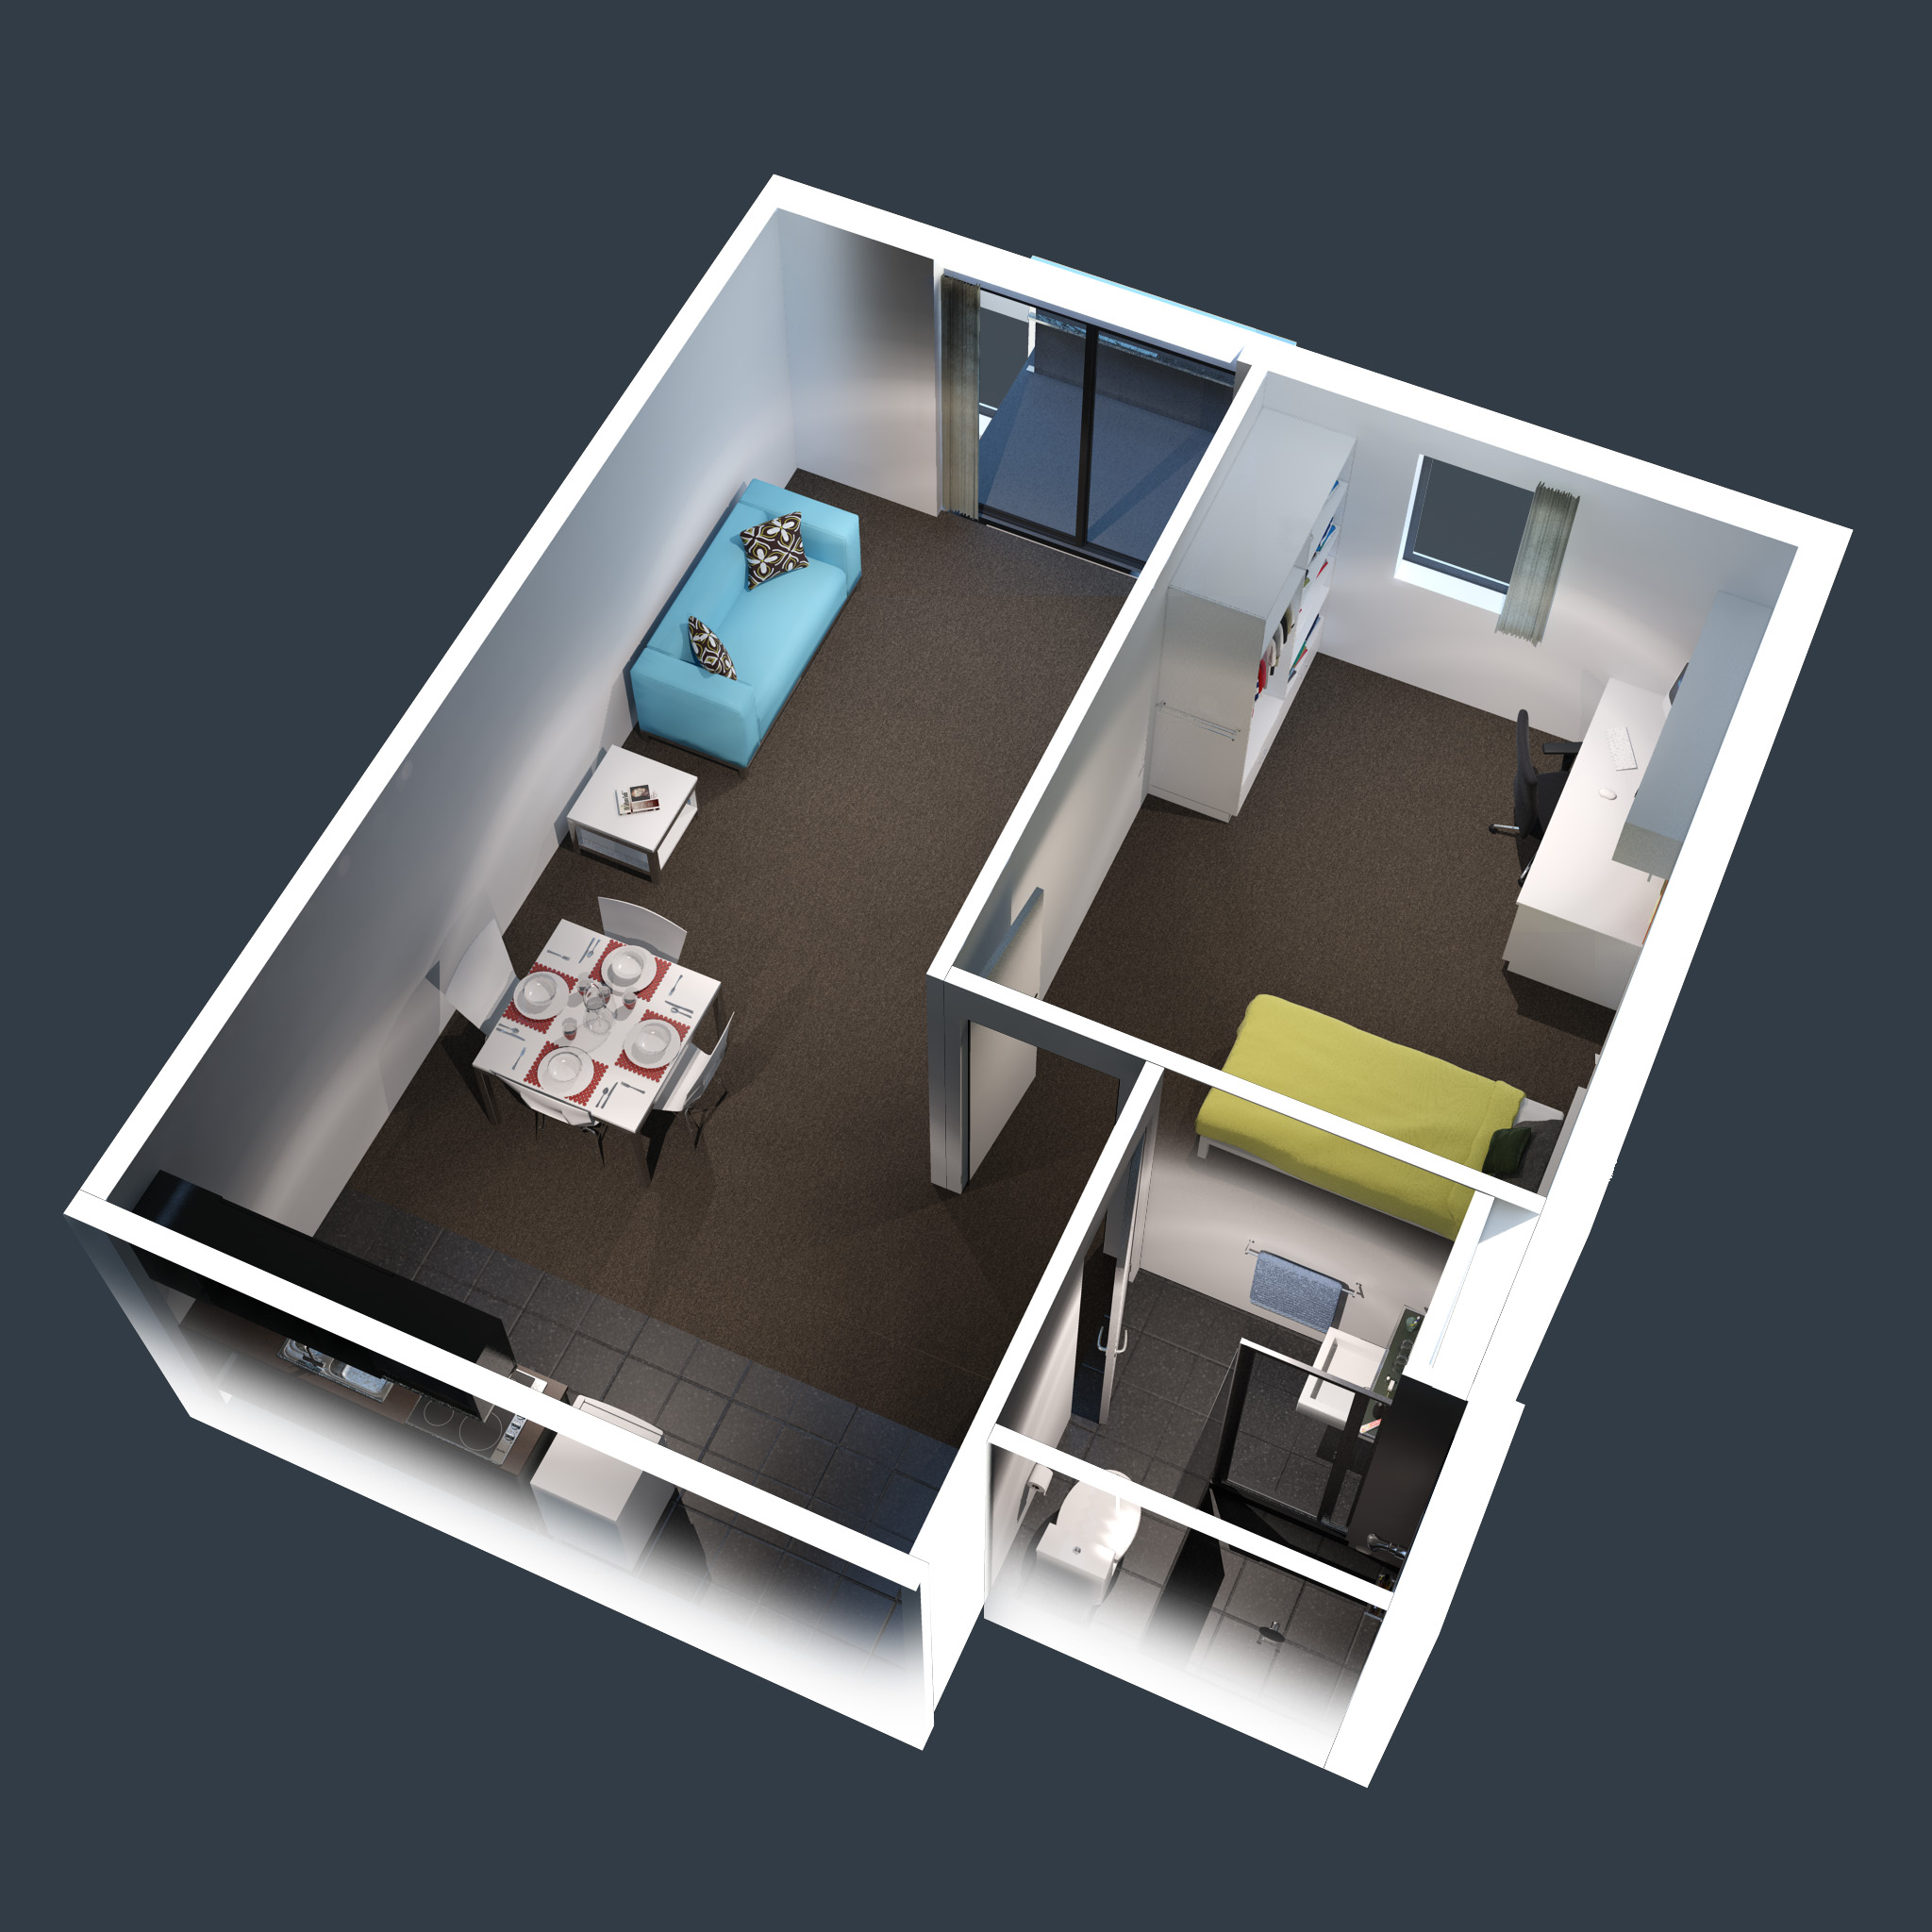 Planning Studio Apartment Floor Plans | Ideas 4 Homes